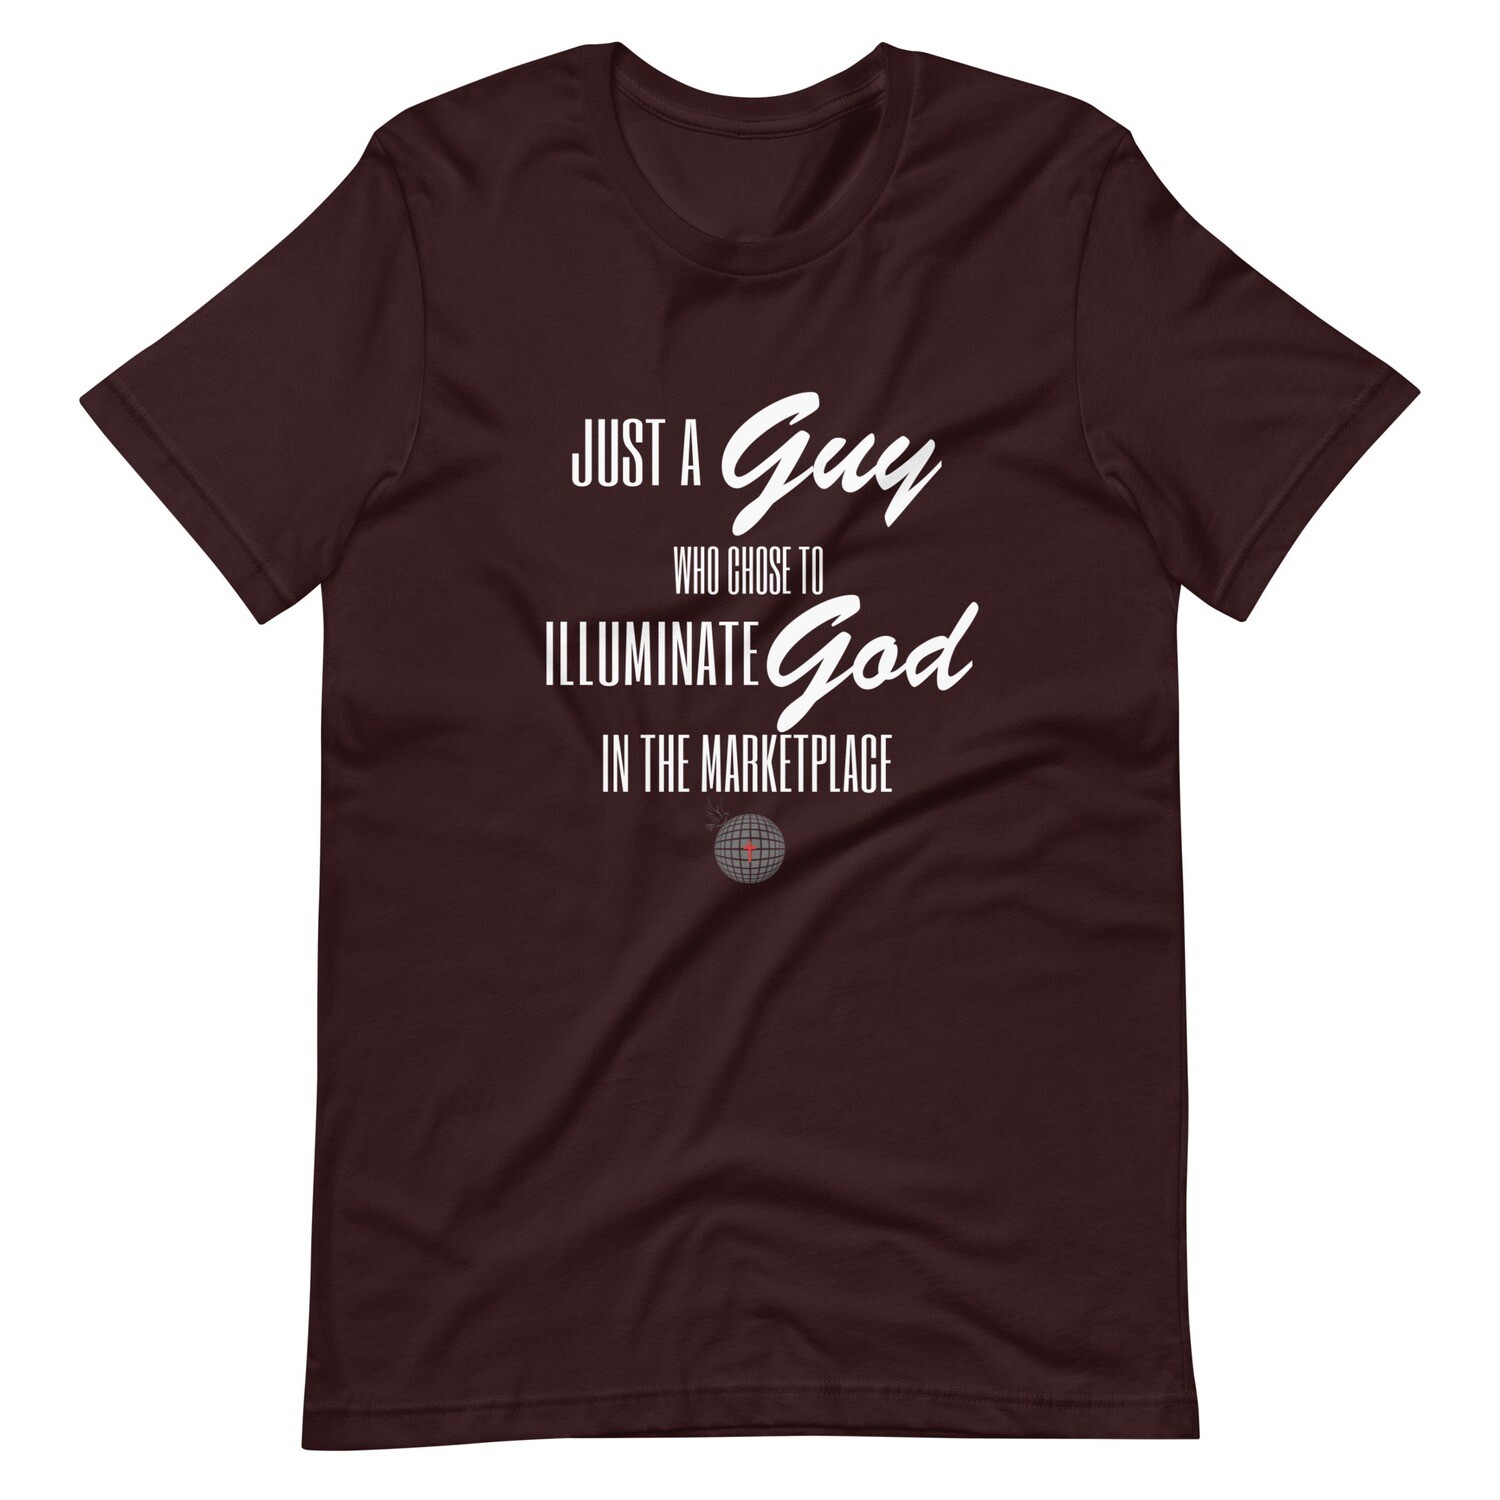 Men's Marketplace Ministry unisex t-shirt